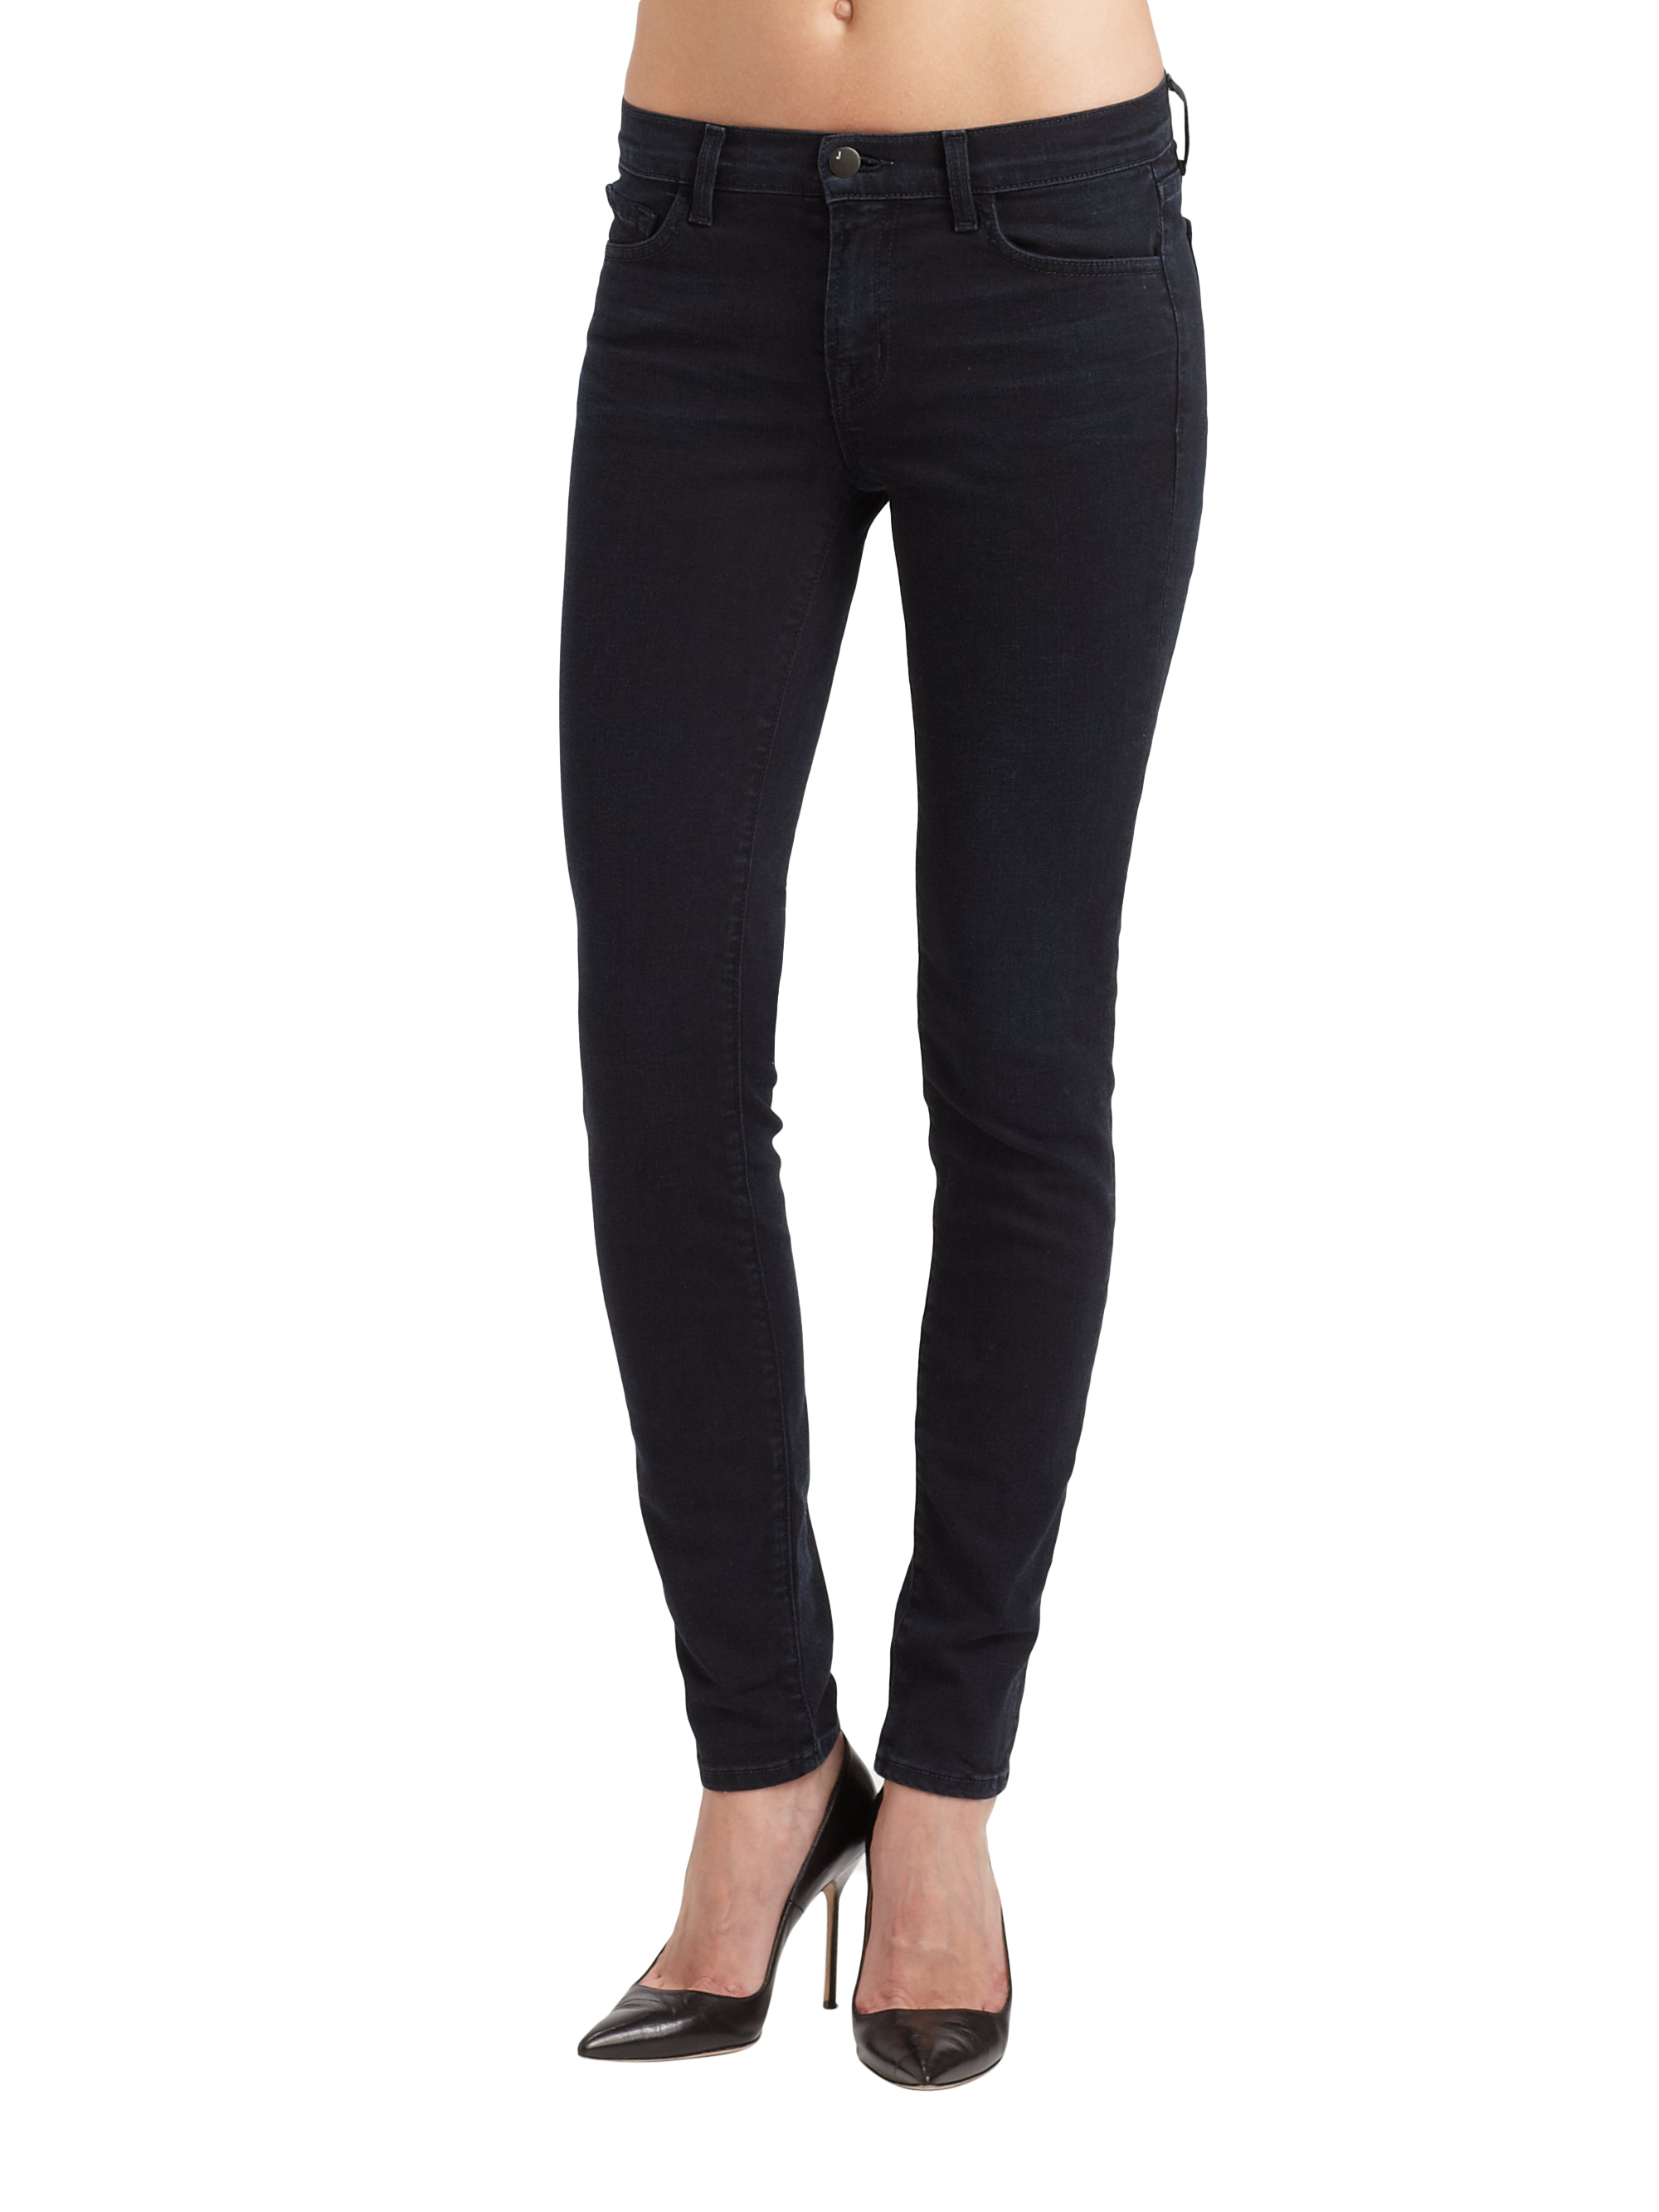 J Brand Women's 811 Mid Rise Slim Skinny Cotton Blend Black Jeans | eBay